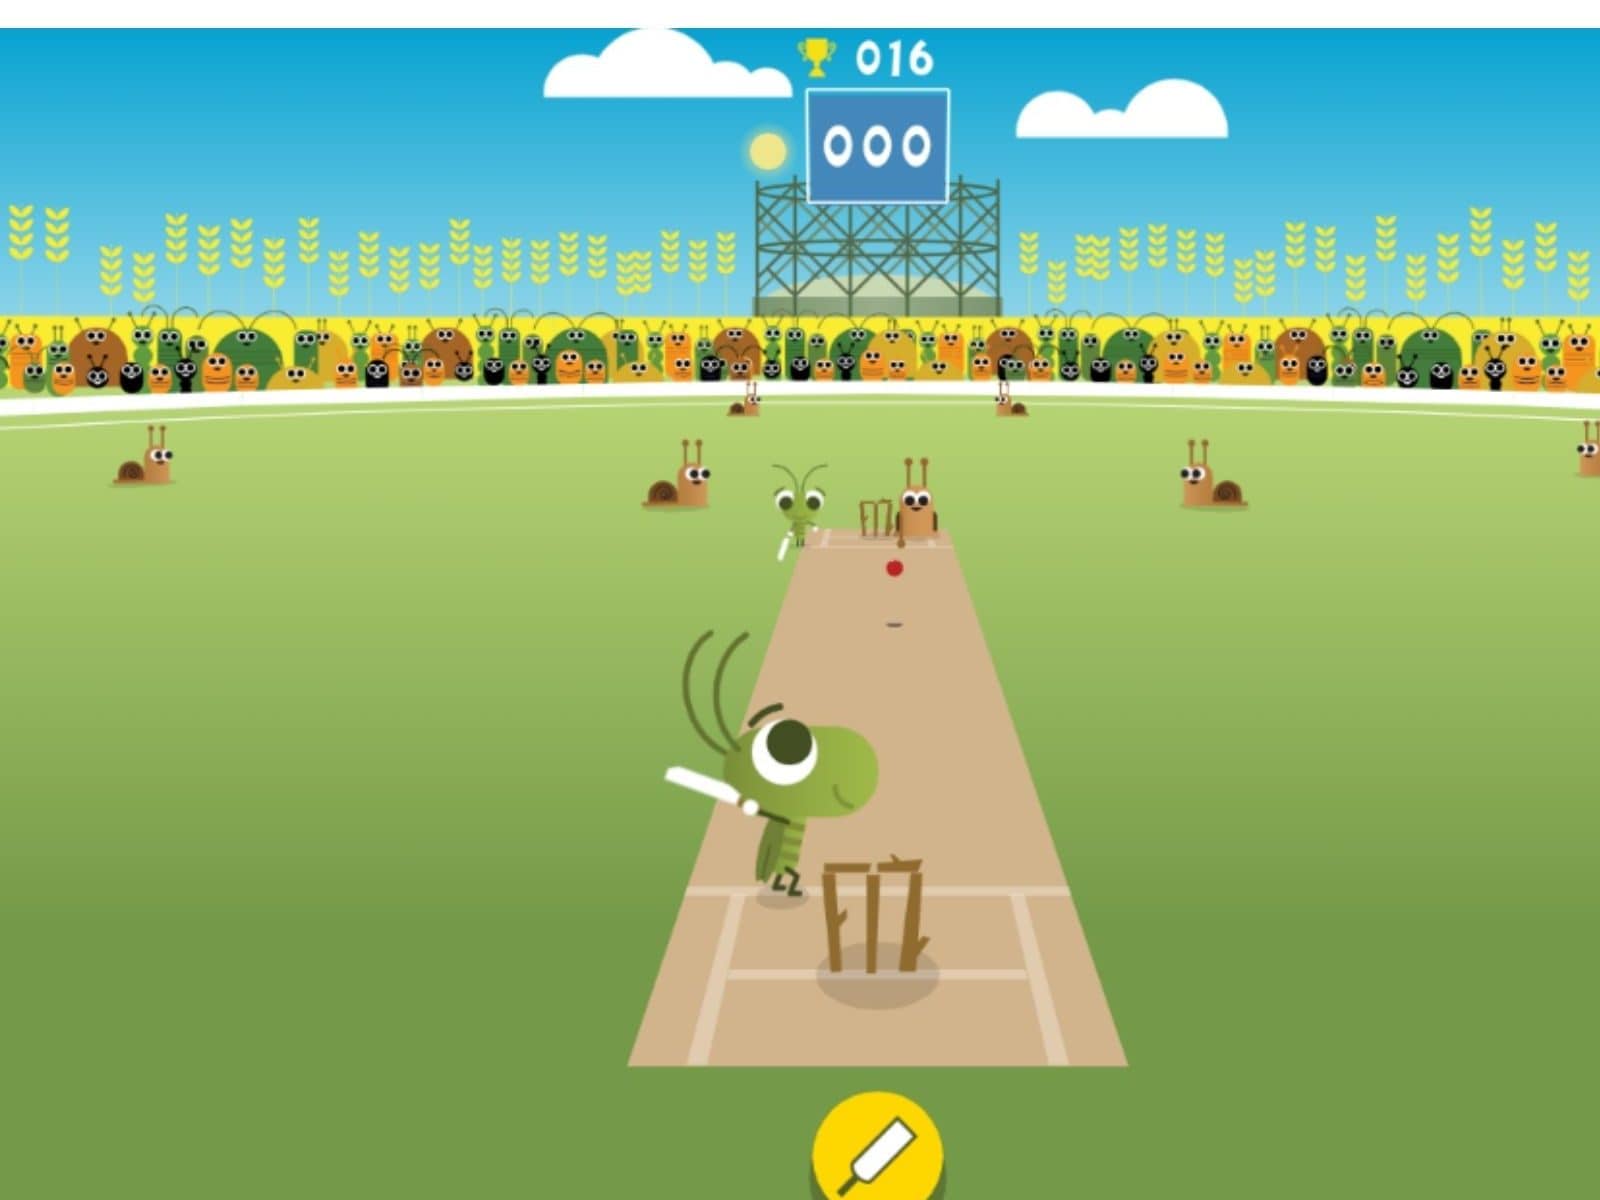 Google Doodle Games- Doodle Baseball and Doodle Cricket